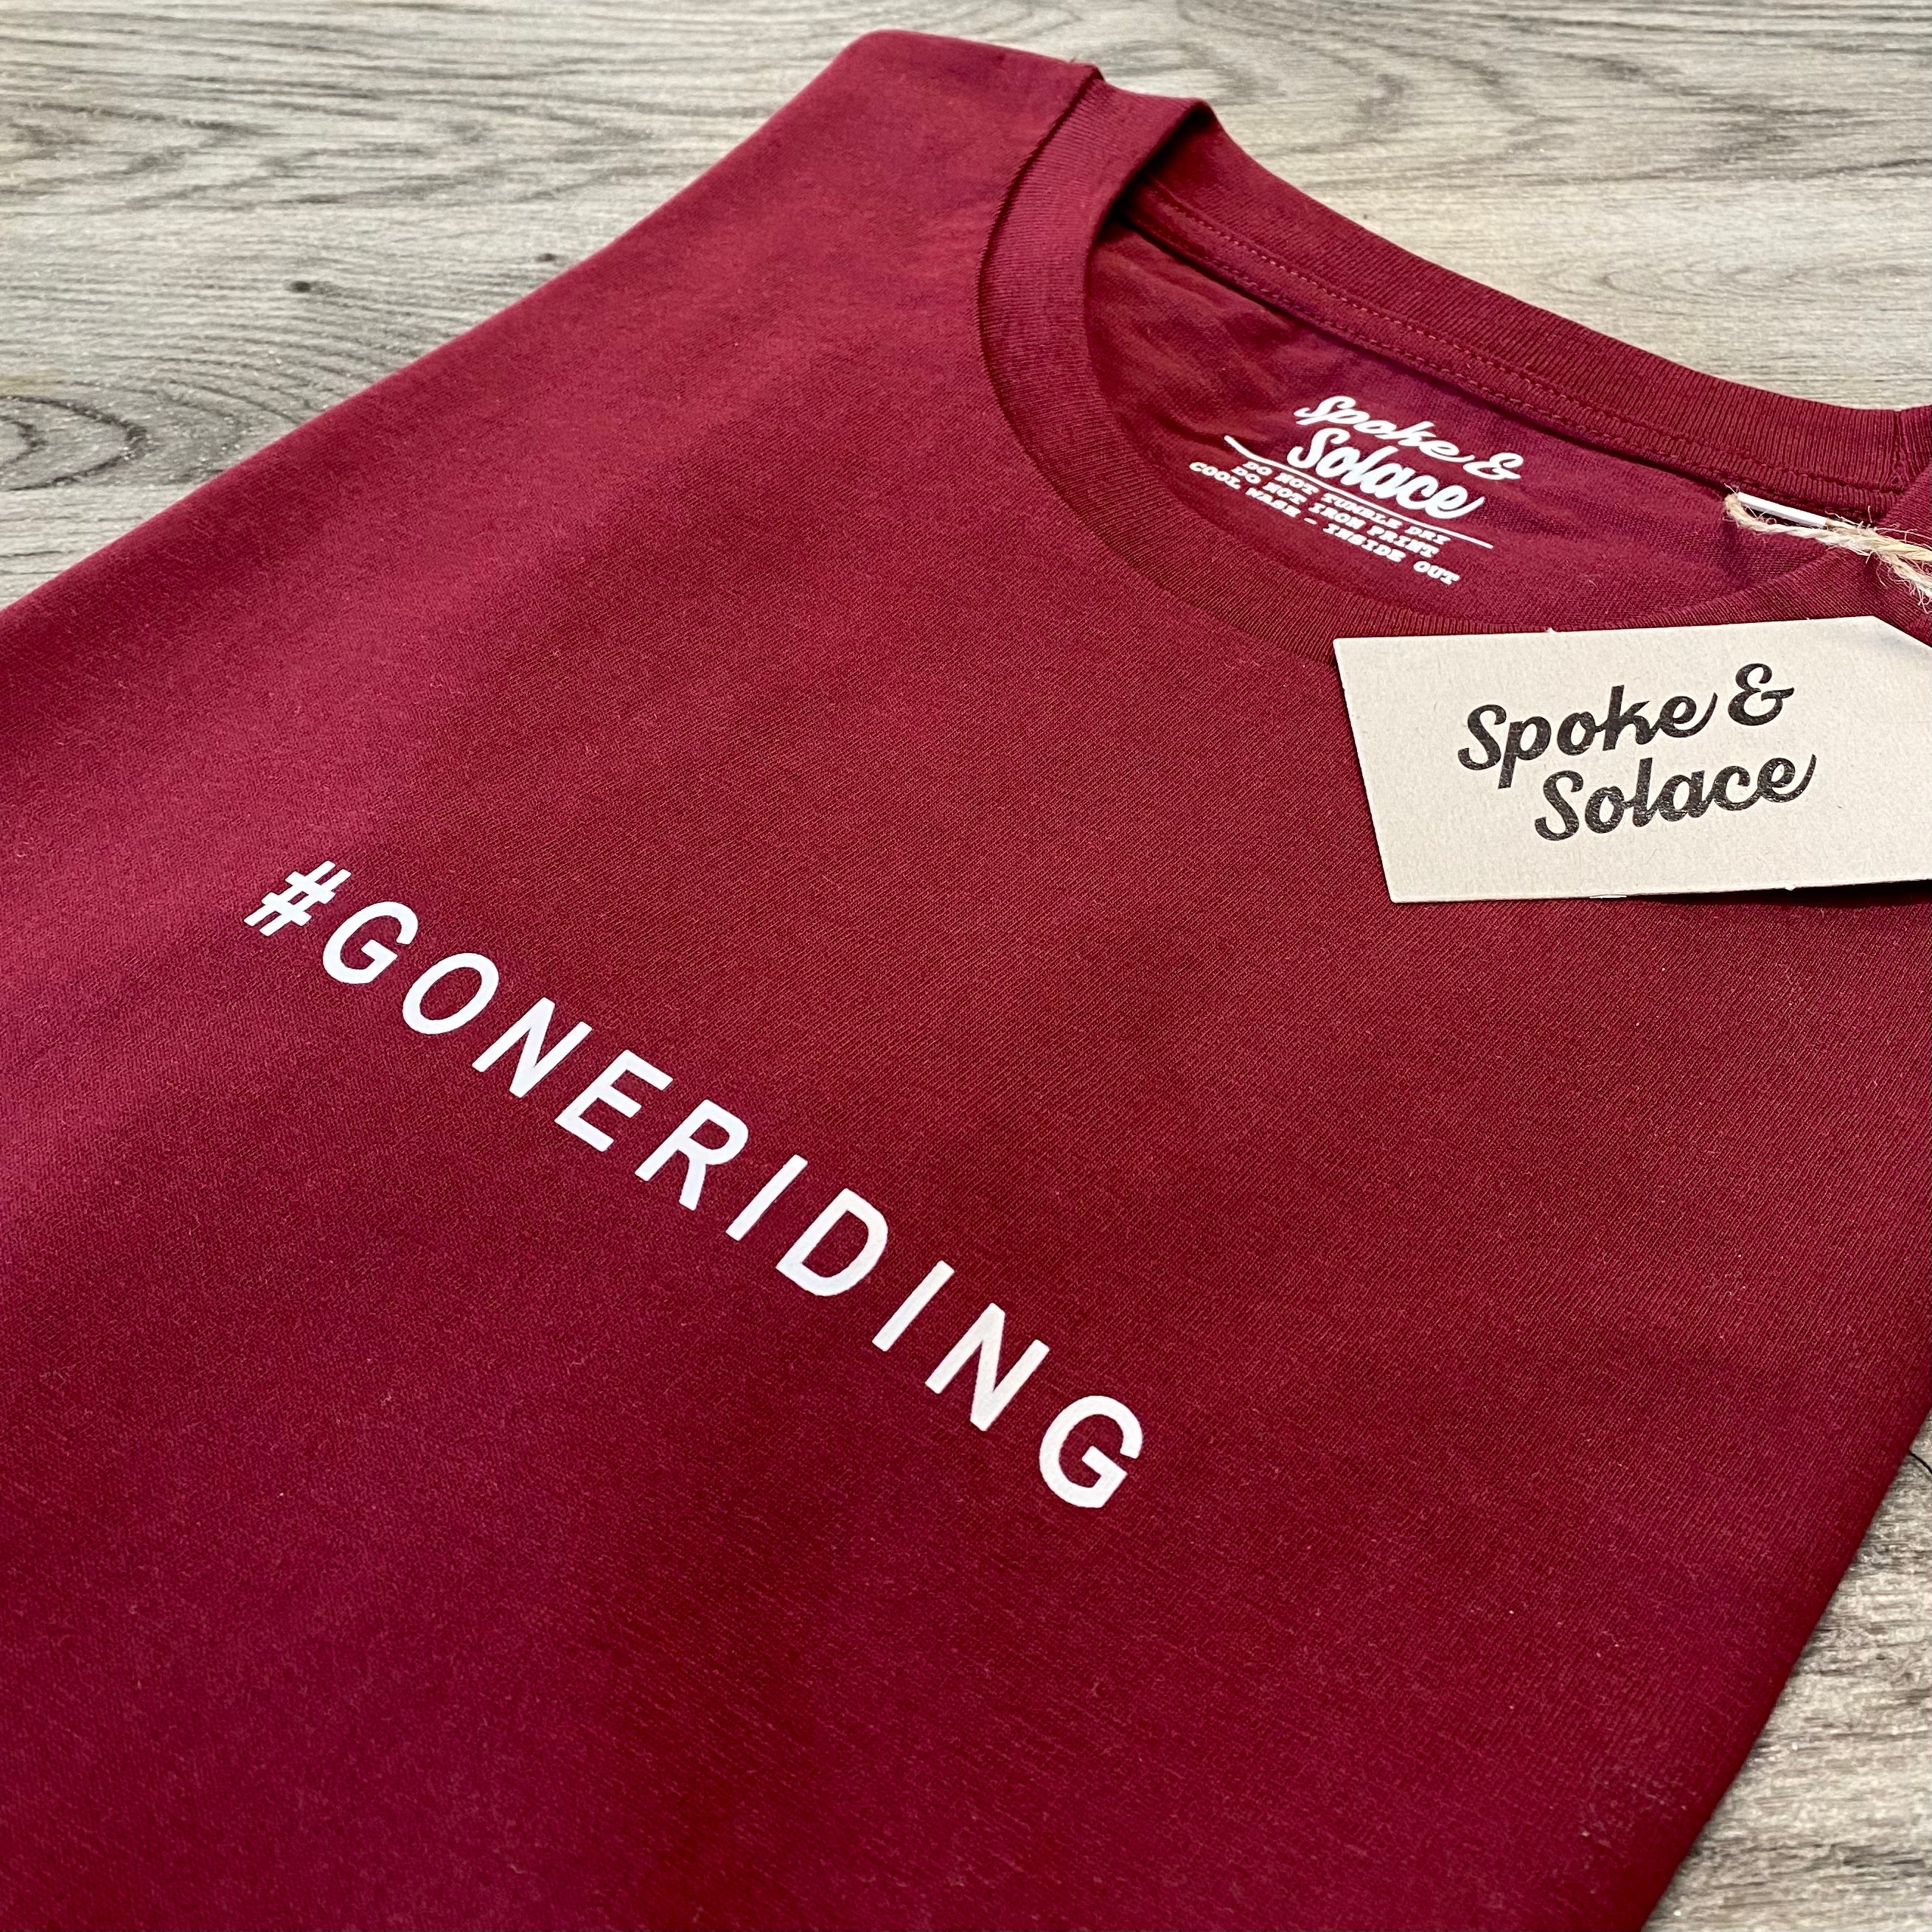 #GONERIDING T-shirt - Spoke & Solace